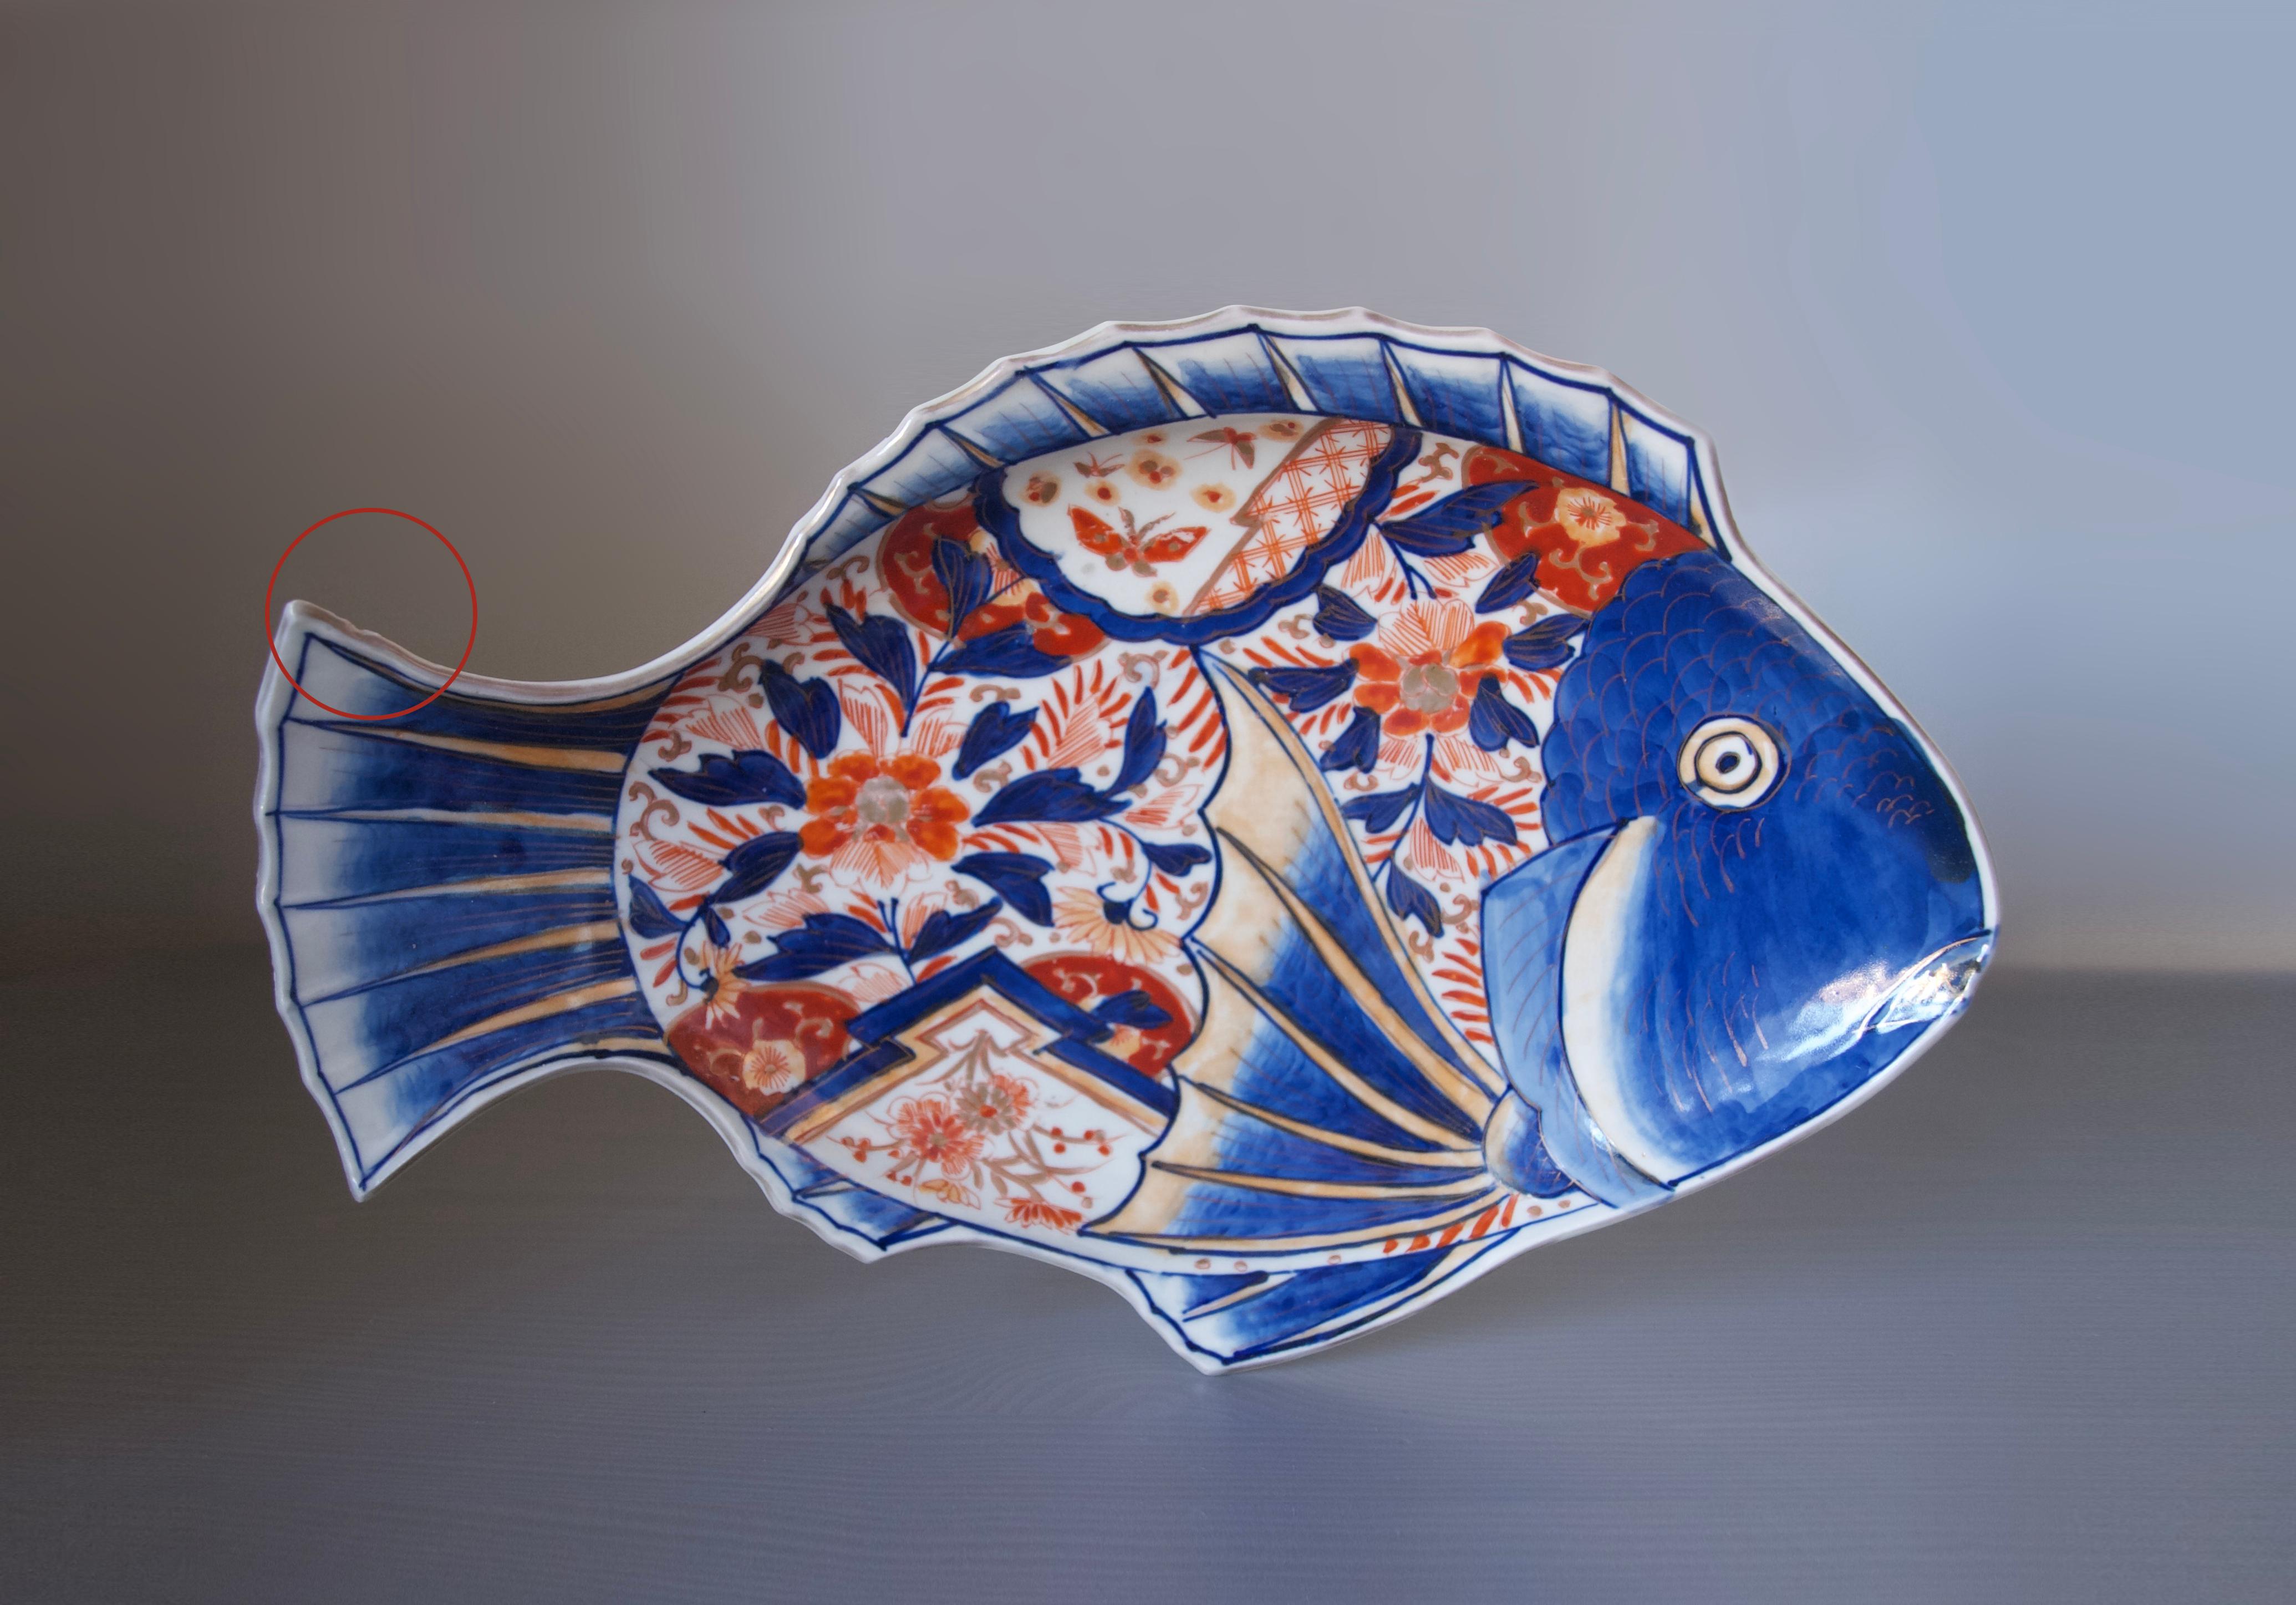 Beautiful antique Japanese porcelain fish shaped sushi serving plate.
Blue, orange, red, gold colours.

Meiji era (1868–1912)
Asian Oriental decor Collectible Porcelain plate.

Dimensions:
Height: 6 cm
Width: 33 cm
Depth: 21 cm

Good